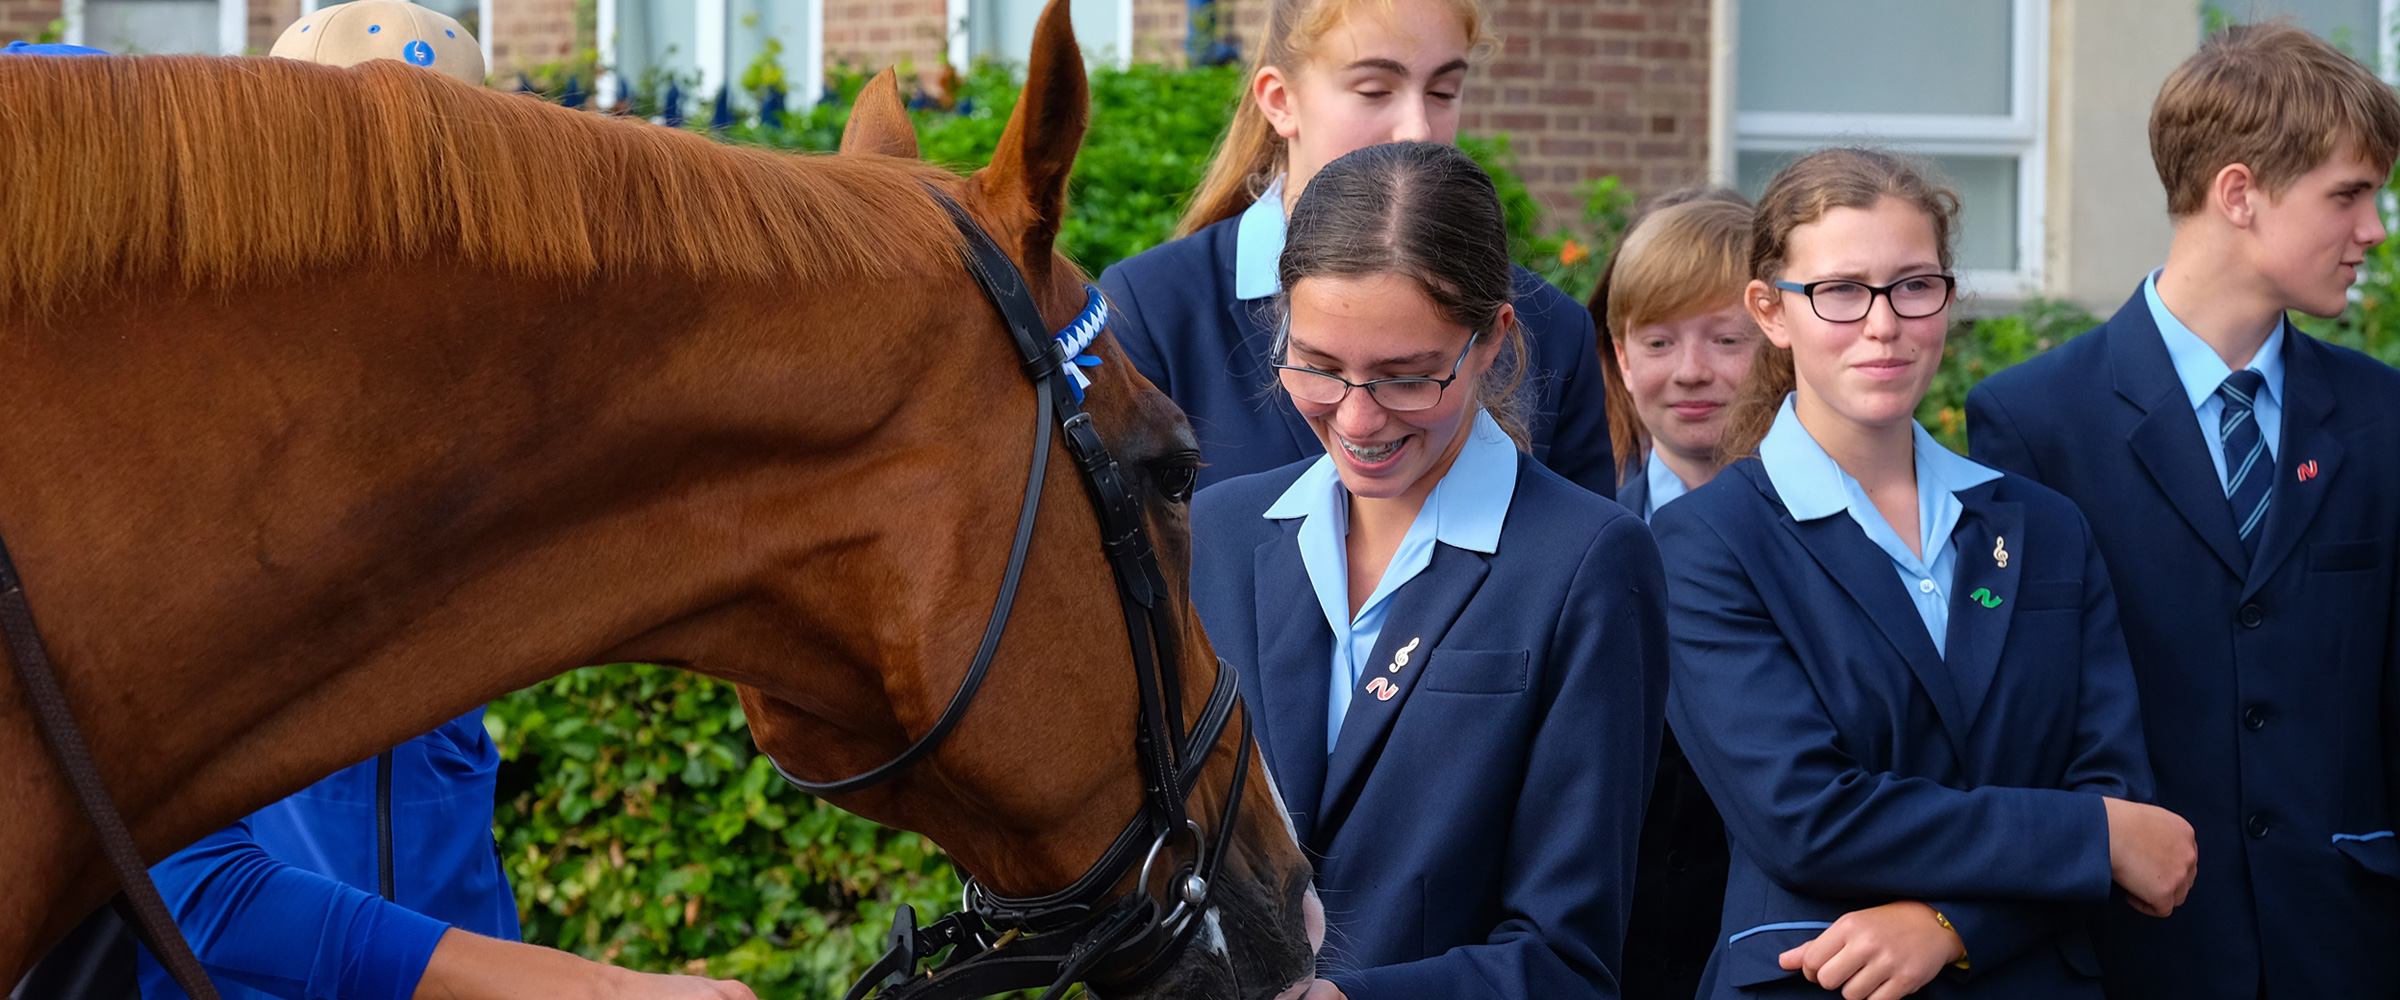 Equine curriculum helps school teach career skills